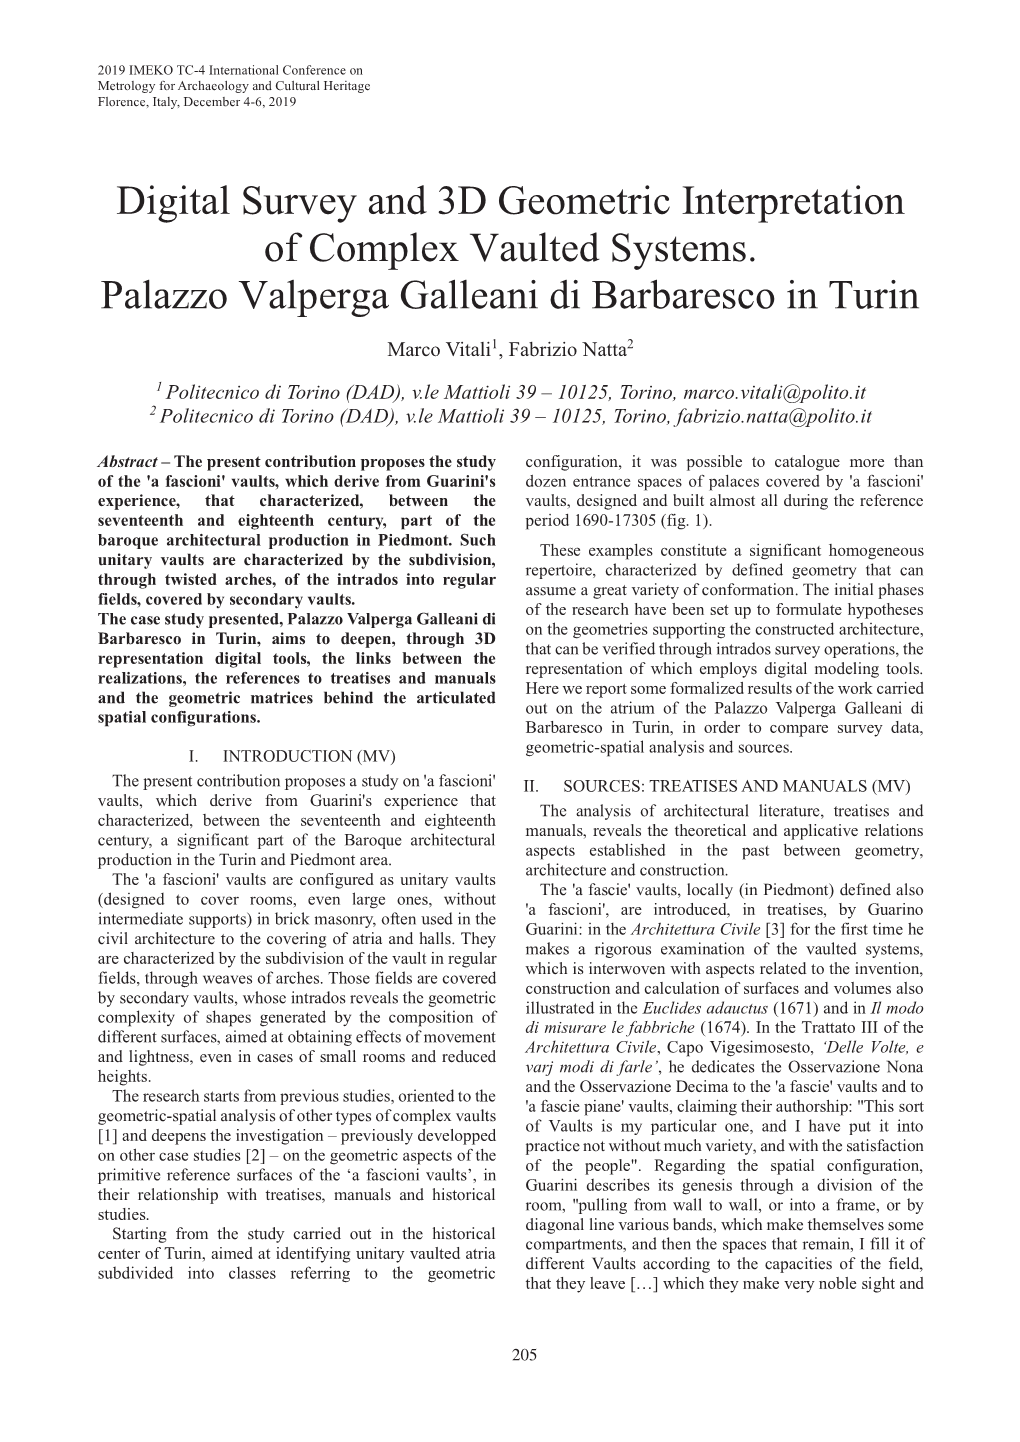 Digital Survey and 3D Geometric Interpretation of Complex Vaulted Systems